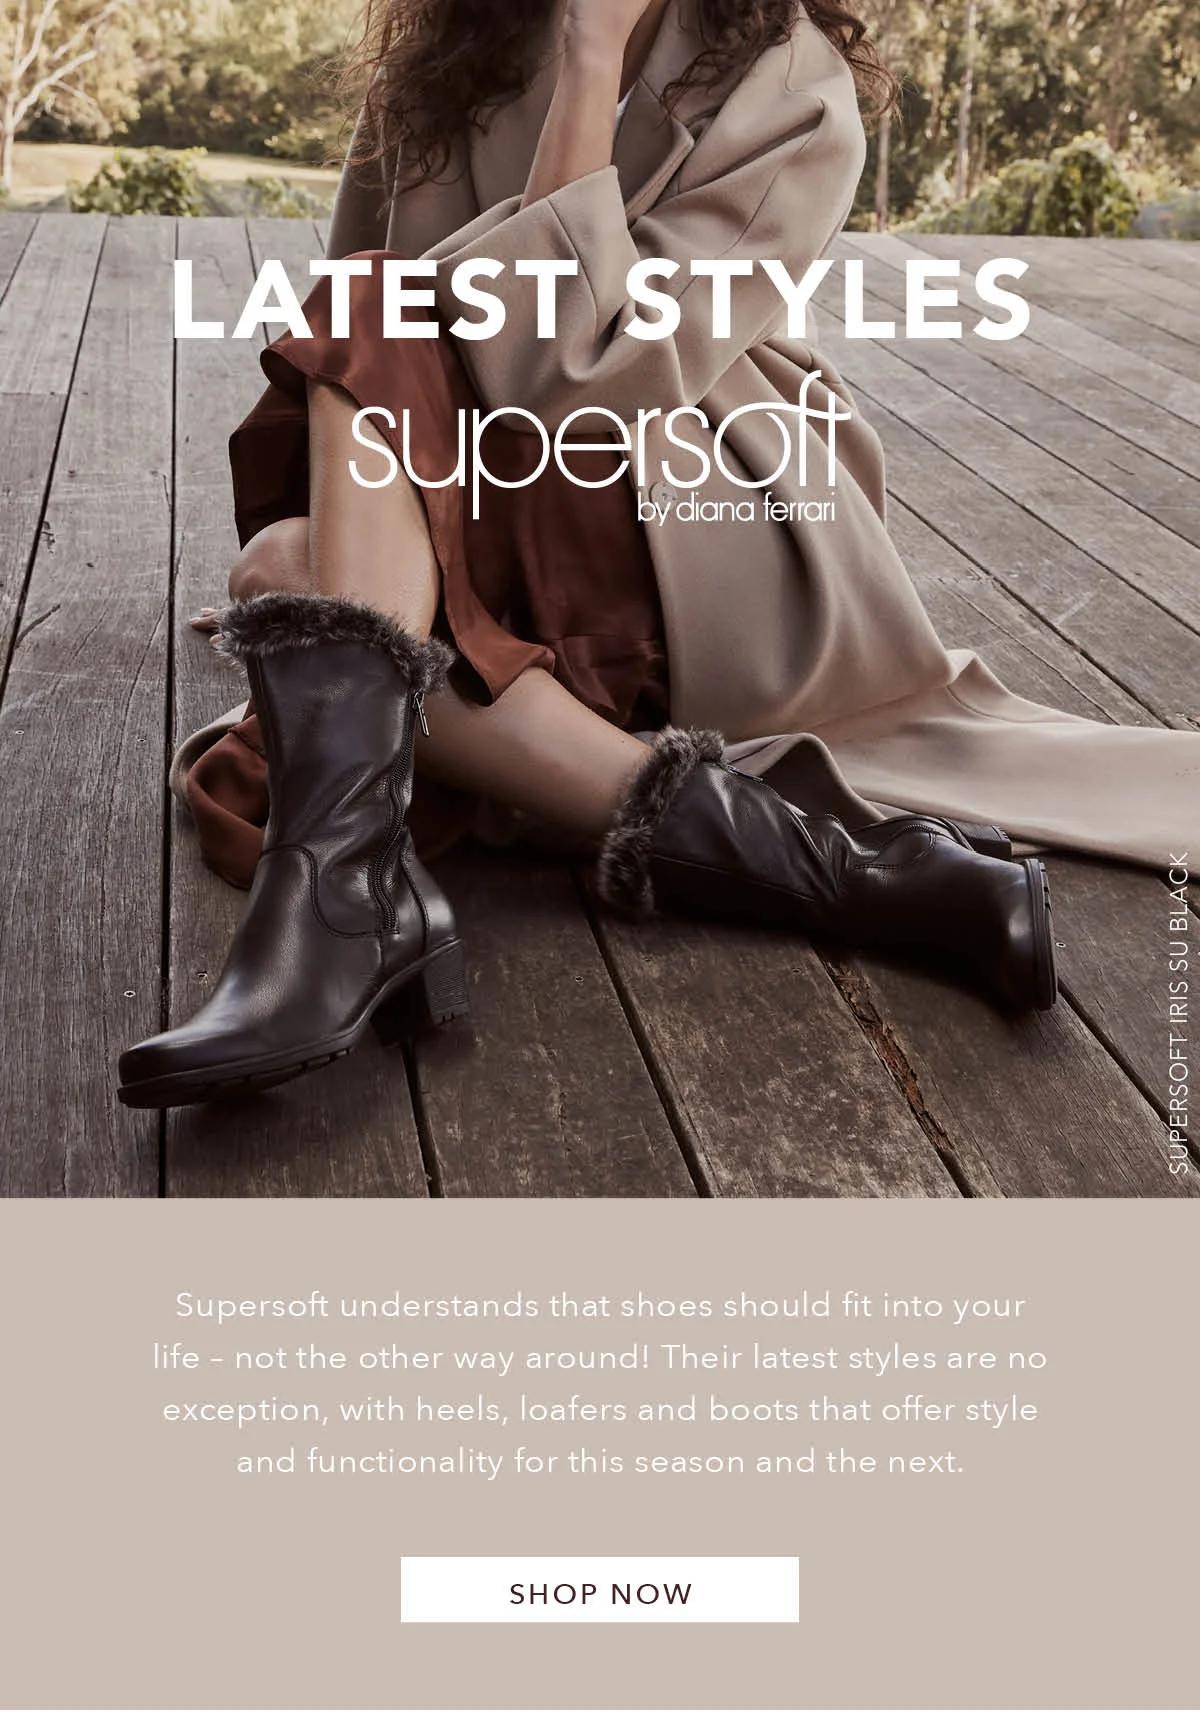 diana ferrari supersoft boots - Is Diana Ferrari an Australian company